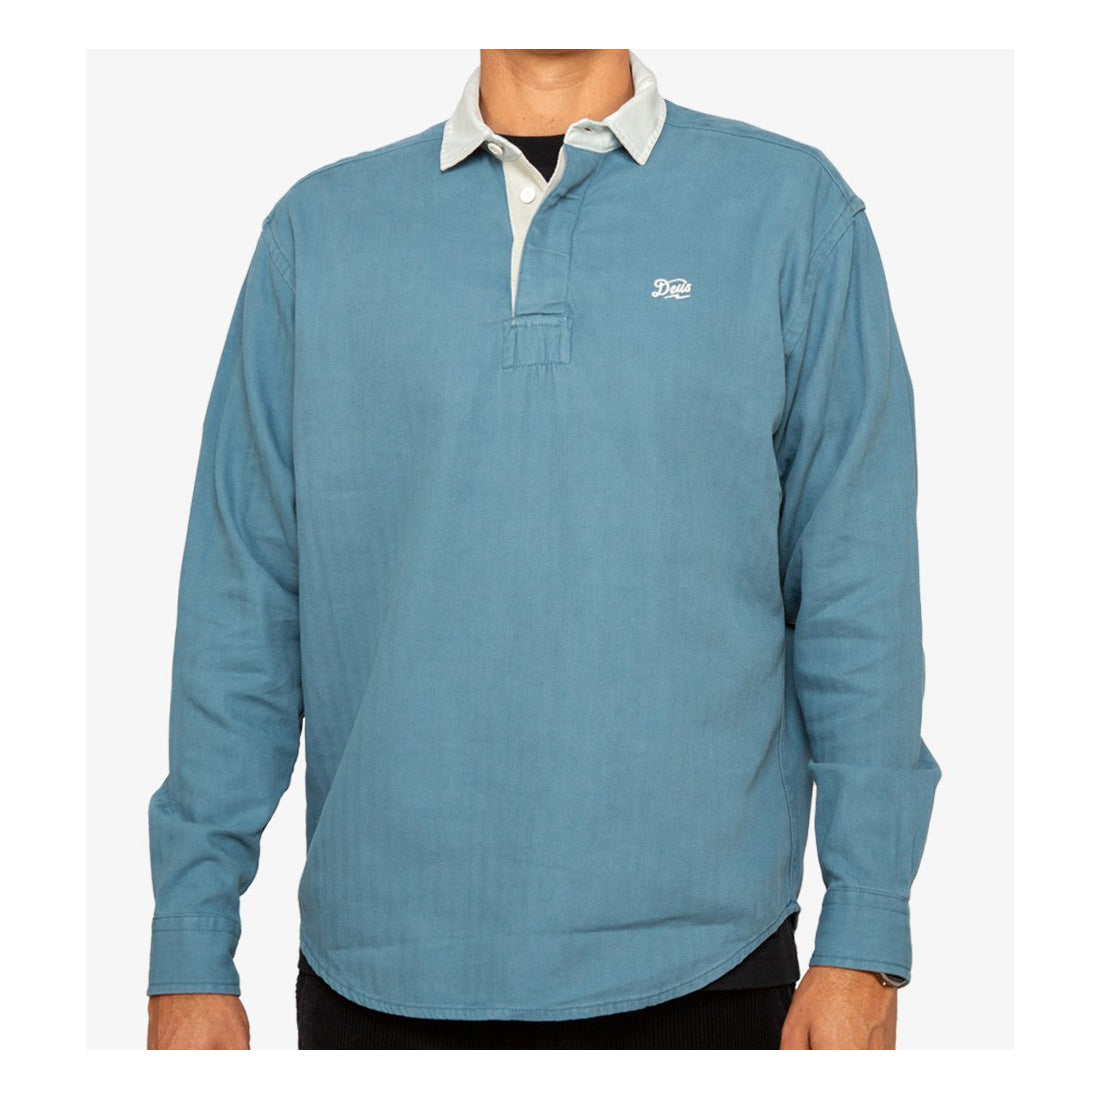 LEON RUGBY shirt, blue